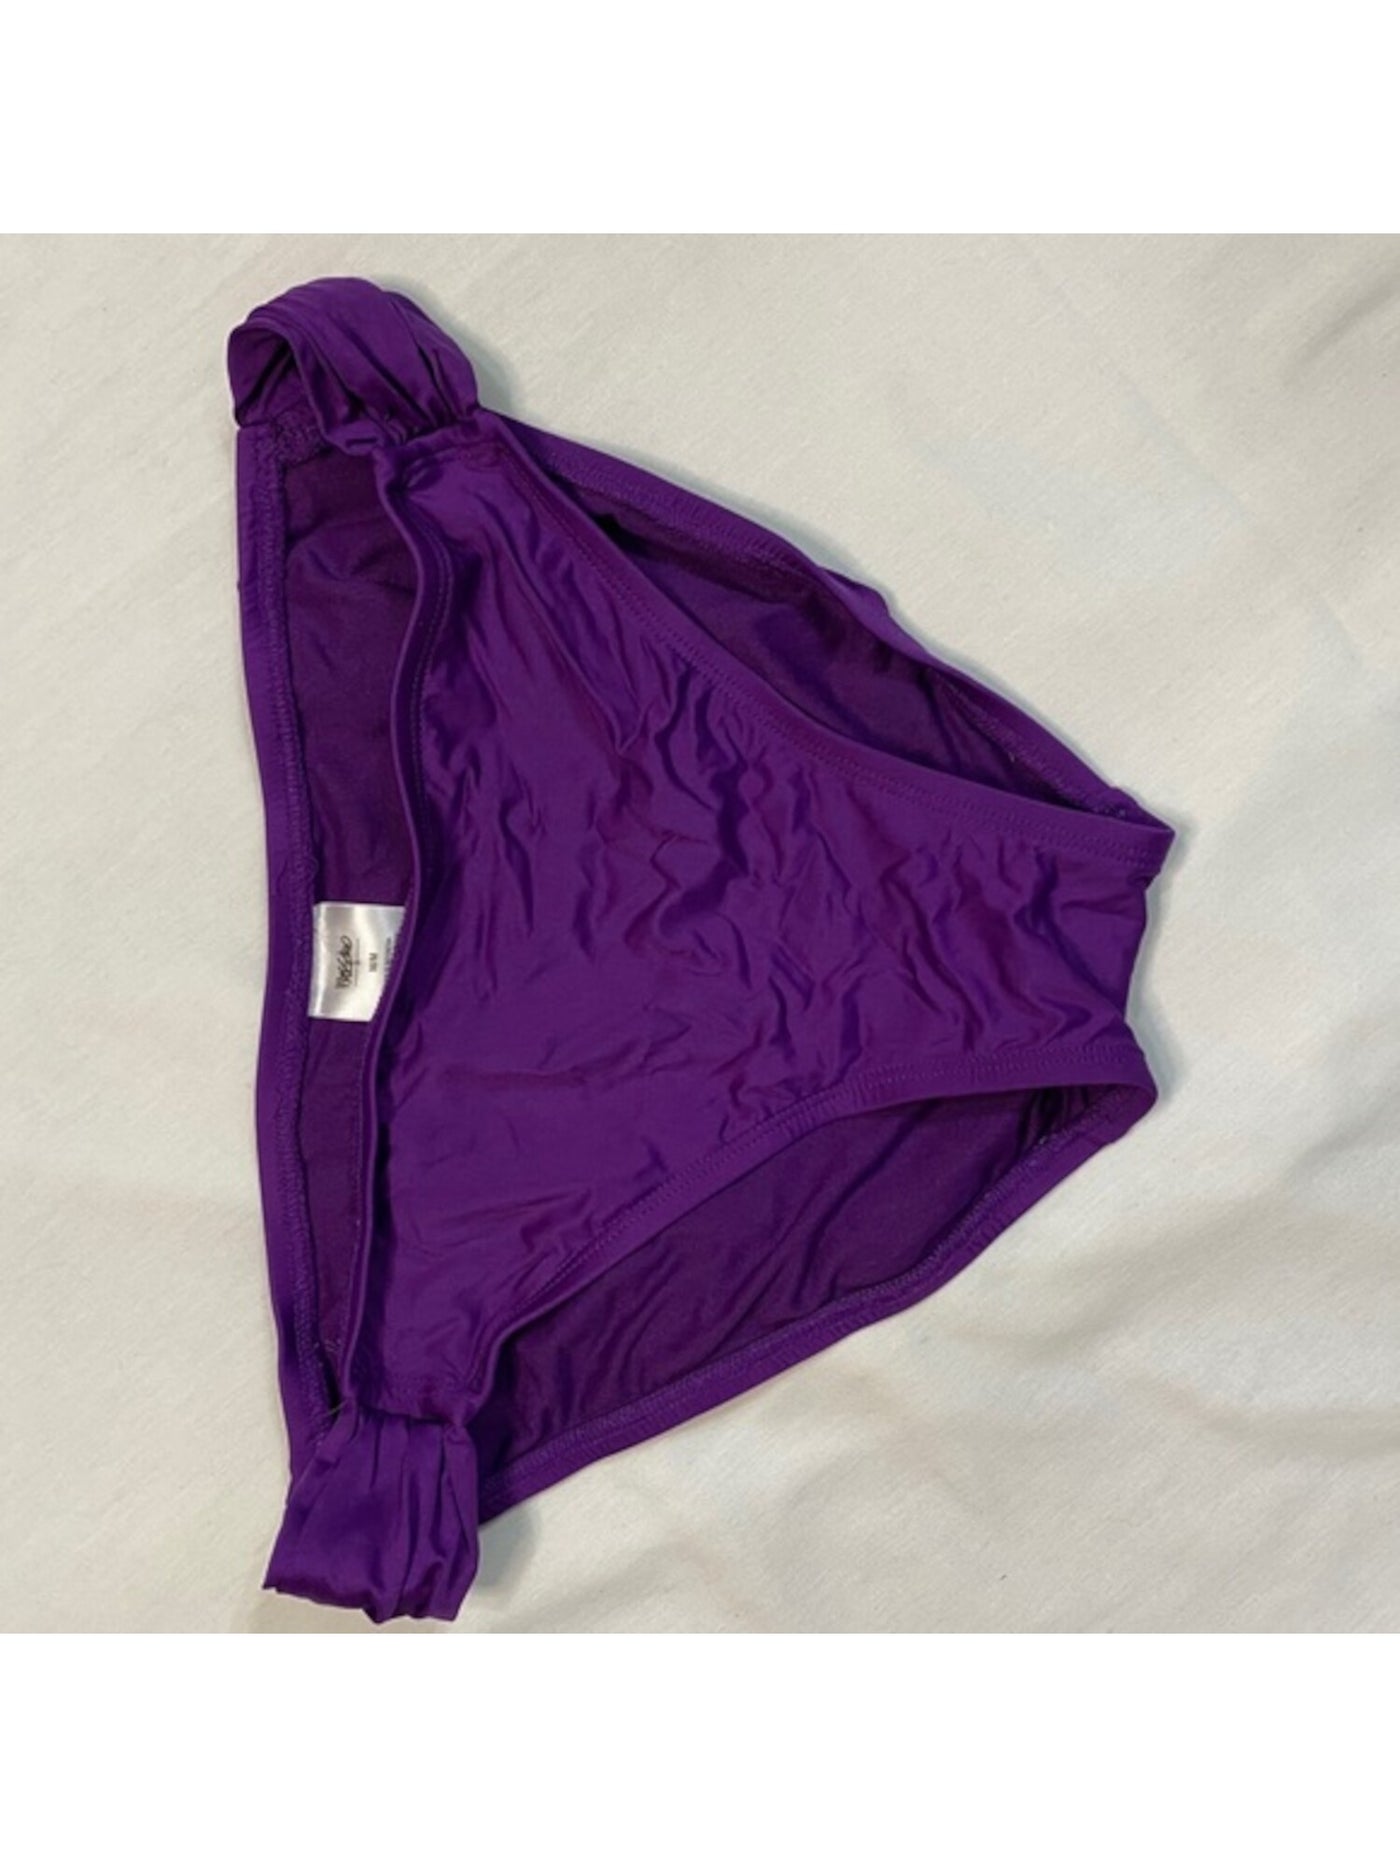 MOSSIMO SUPPLY CO. Women's Purple Ruched Bikini Swimwear Bottom S